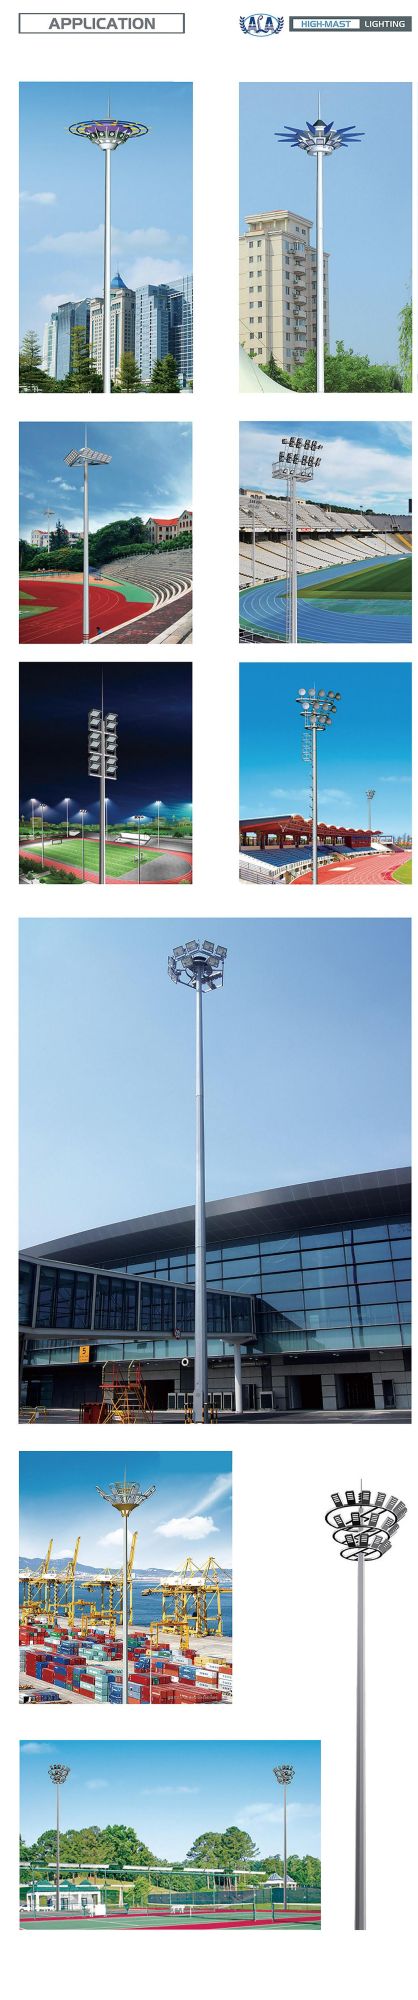 Ala 800W Soccer Field Football Stadium High Mast Outdoor LED High Mast Light